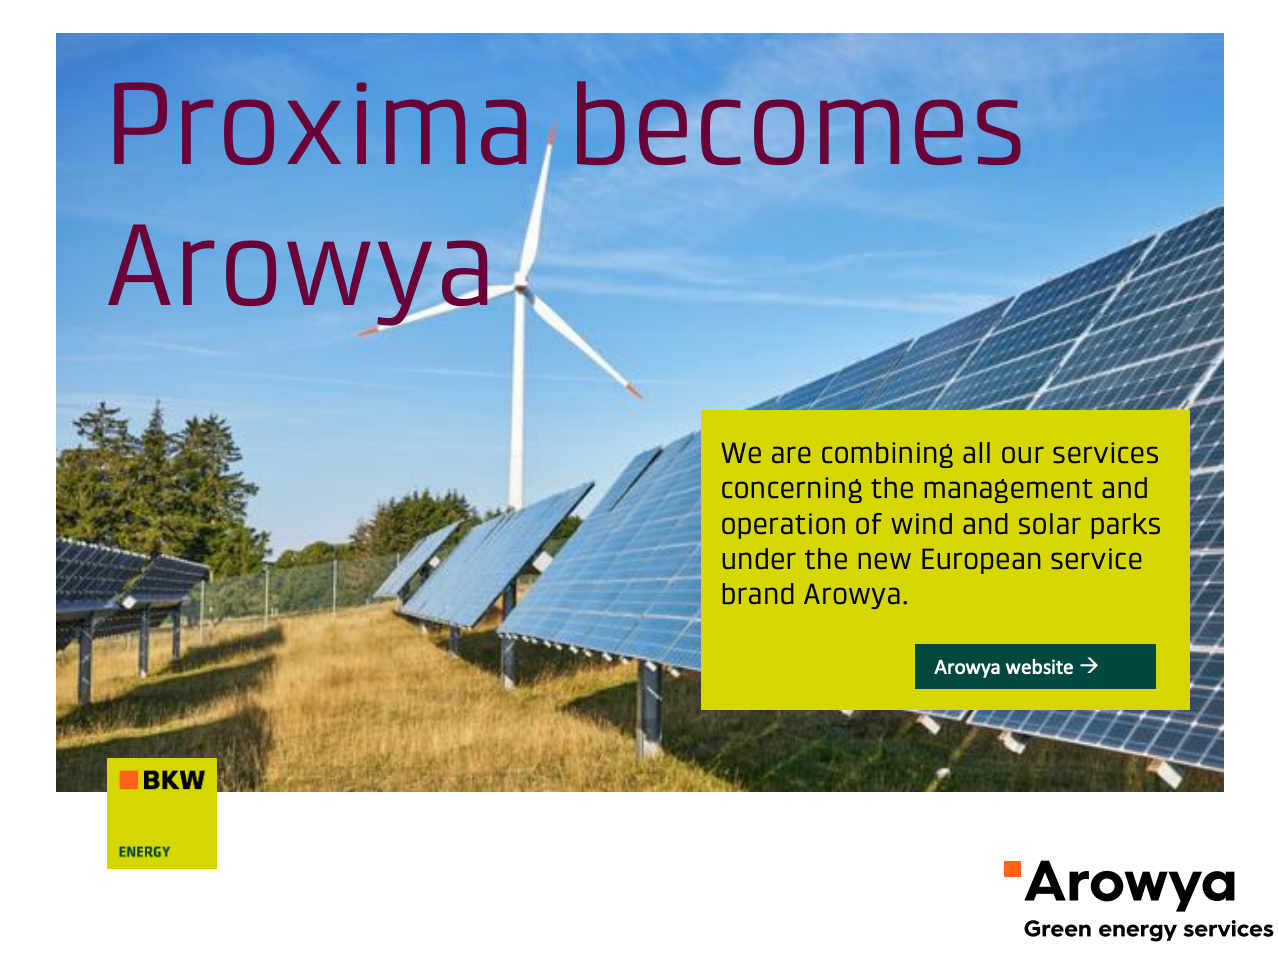 Proxima becomes Arowya